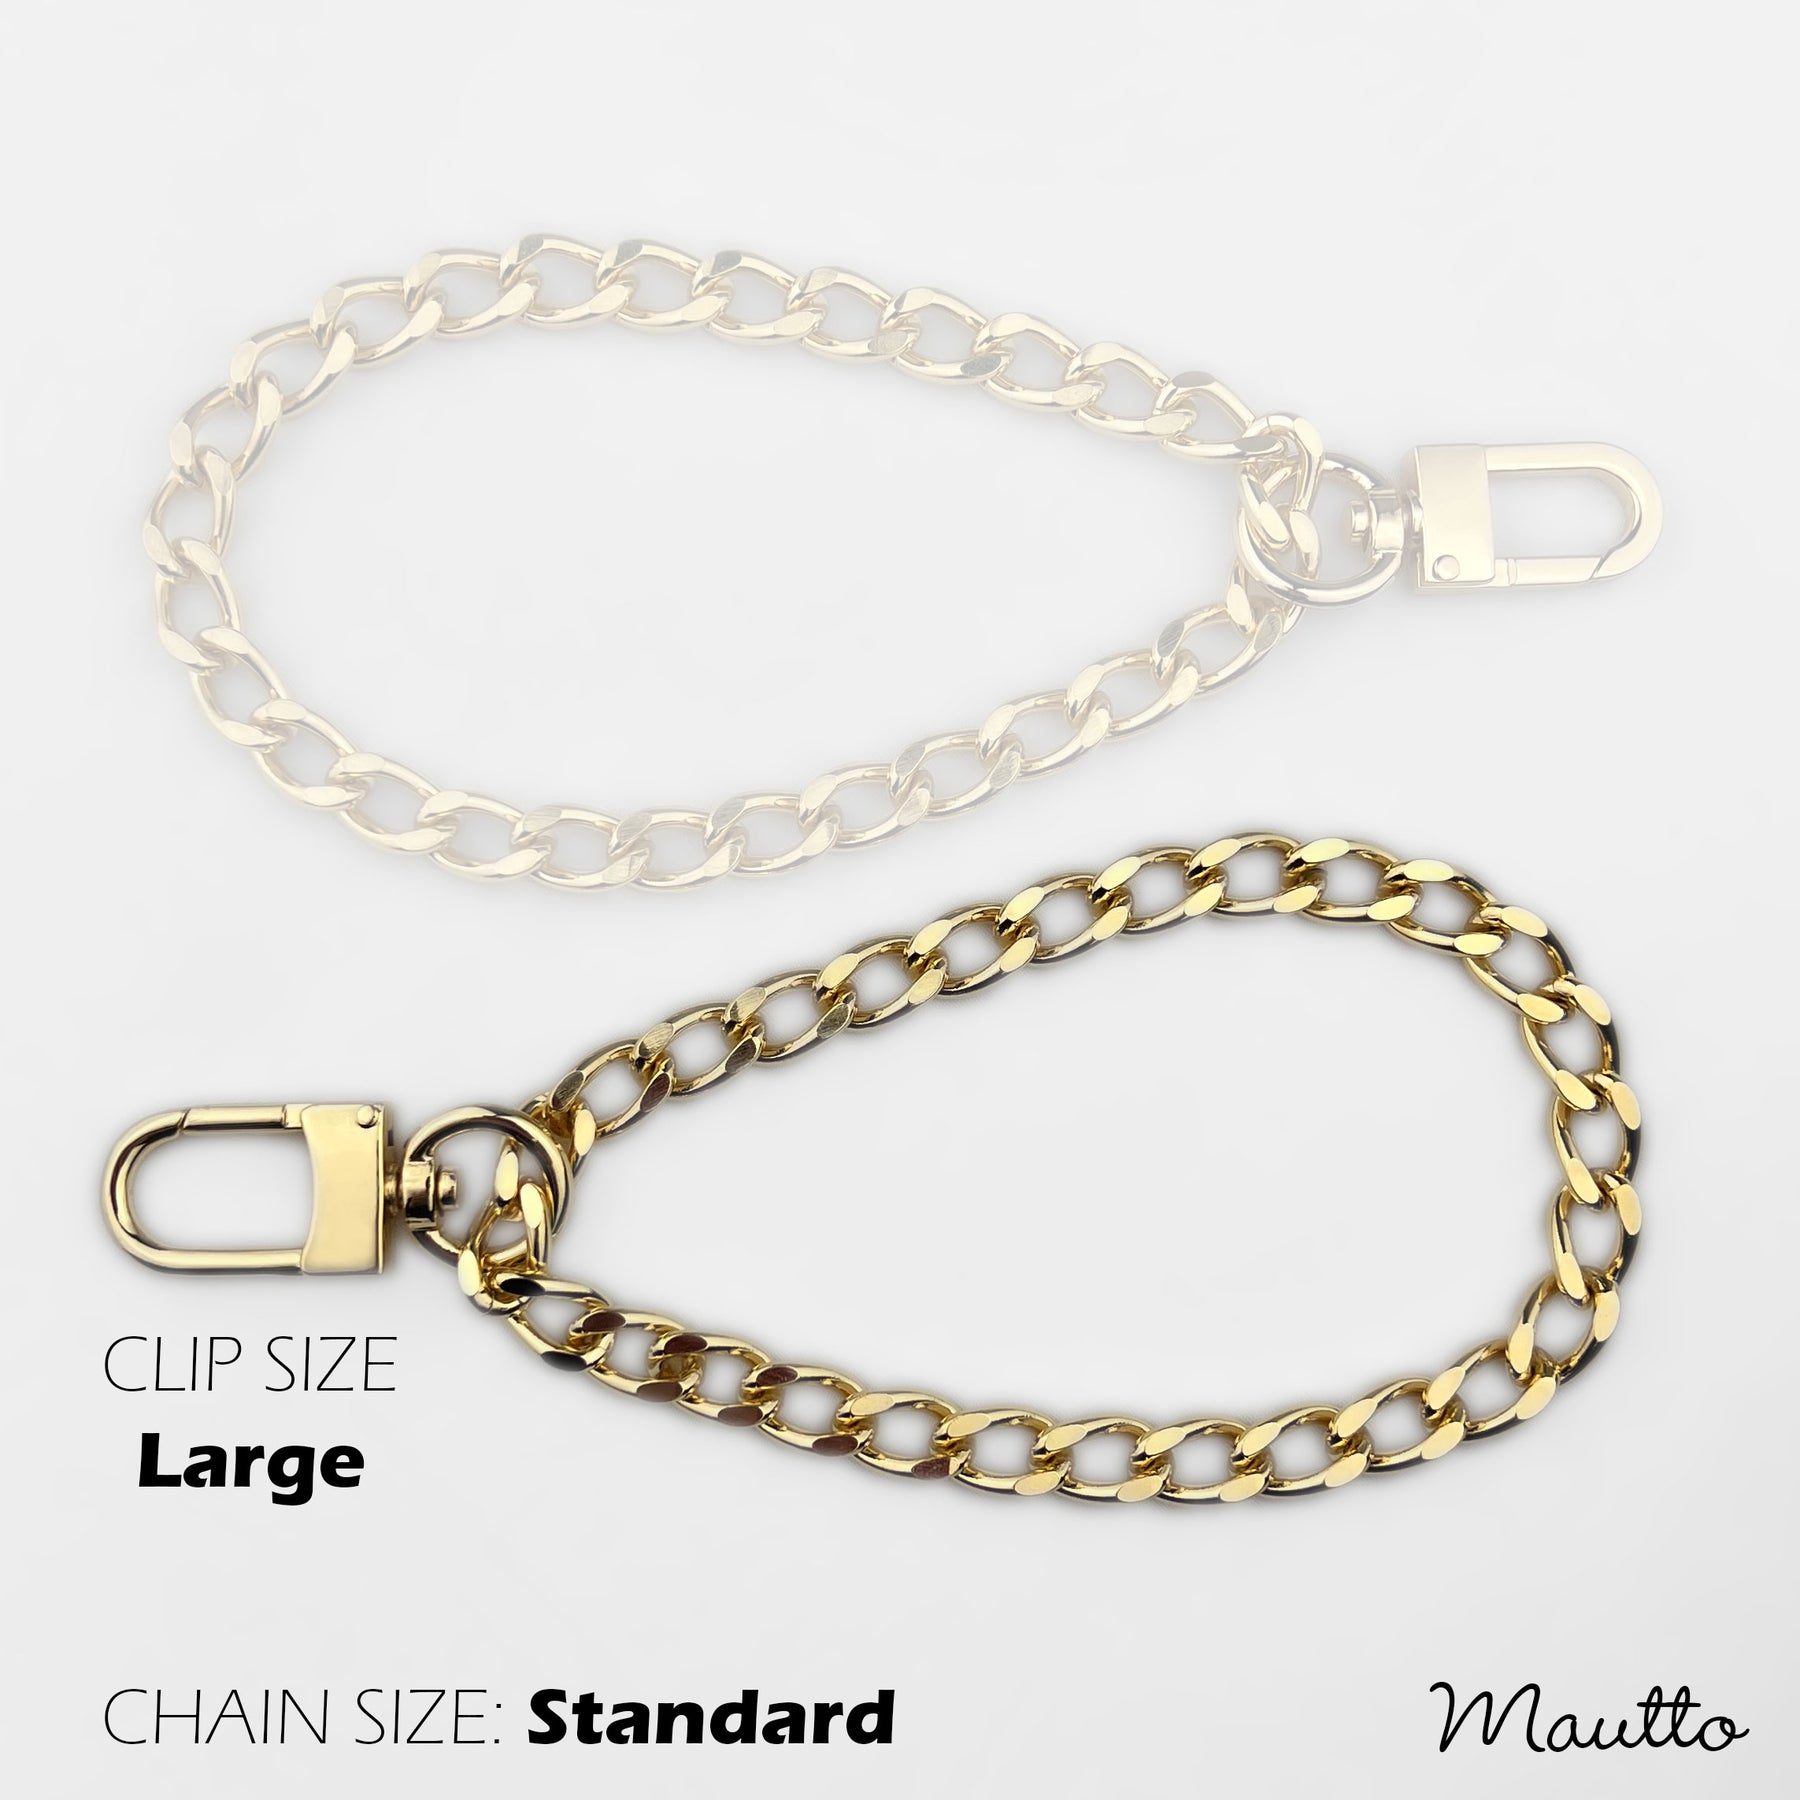 Glamorous Metallic Leather Wrist Strap & Keychain Accessory – Mautto